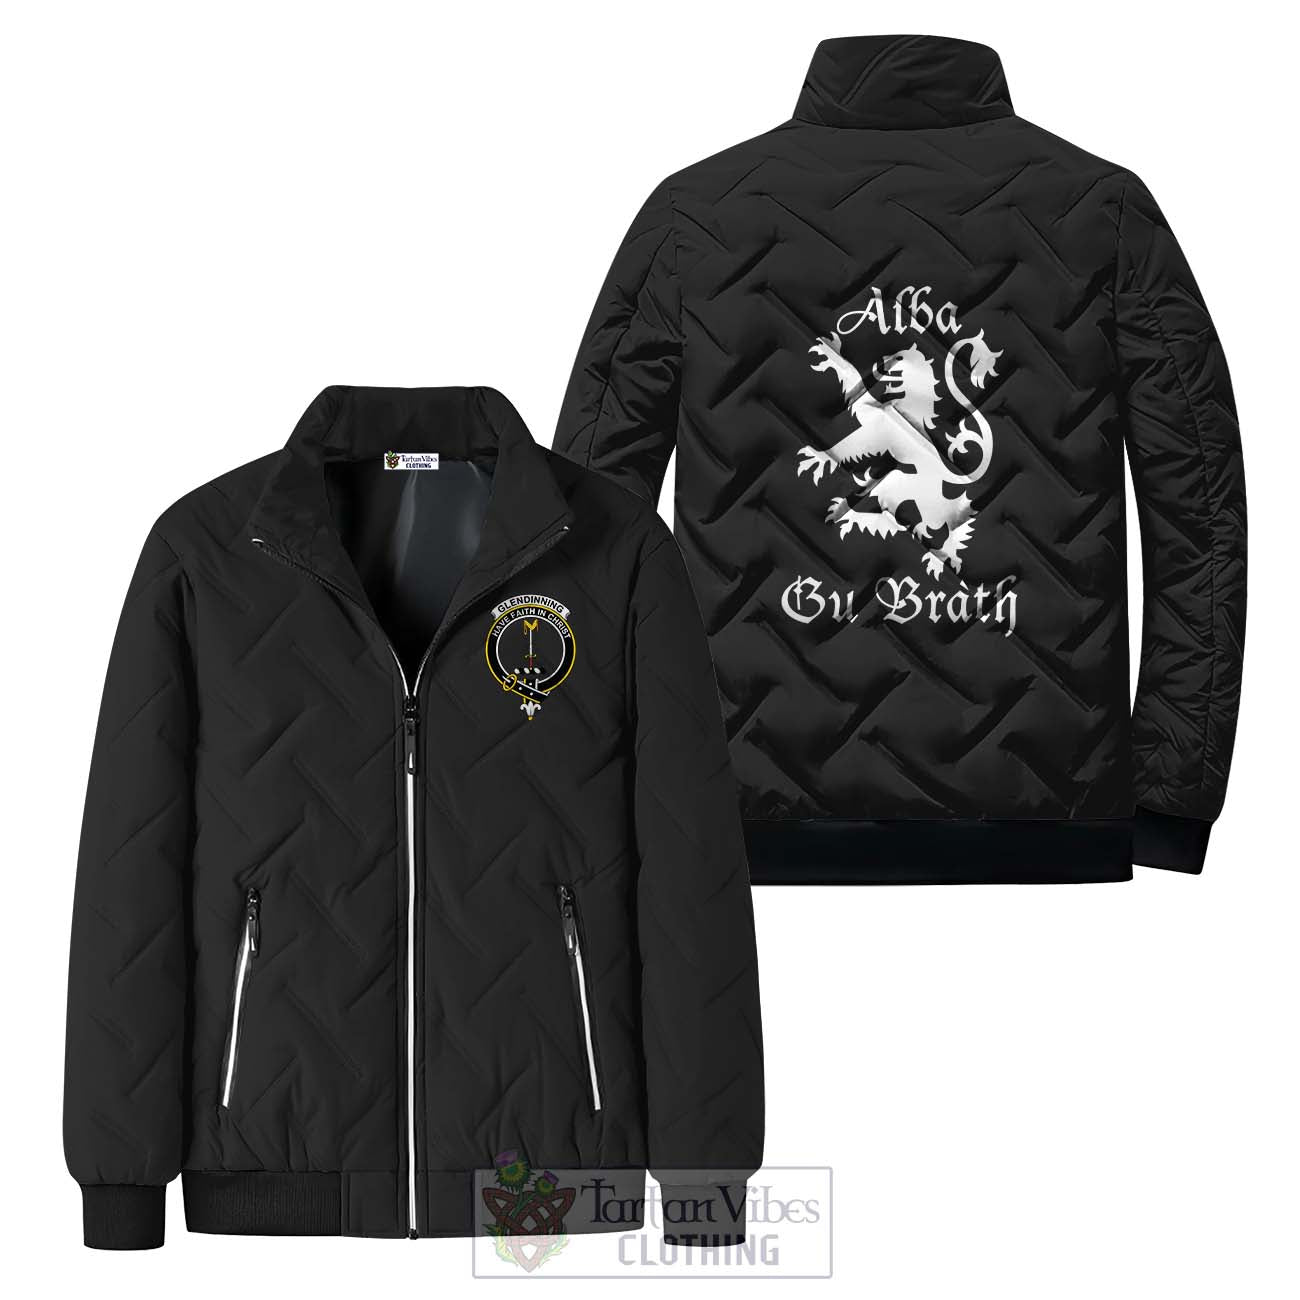 Tartan Vibes Clothing Glendinning Family Crest Padded Cotton Jacket Lion Rampant Alba Gu Brath Style